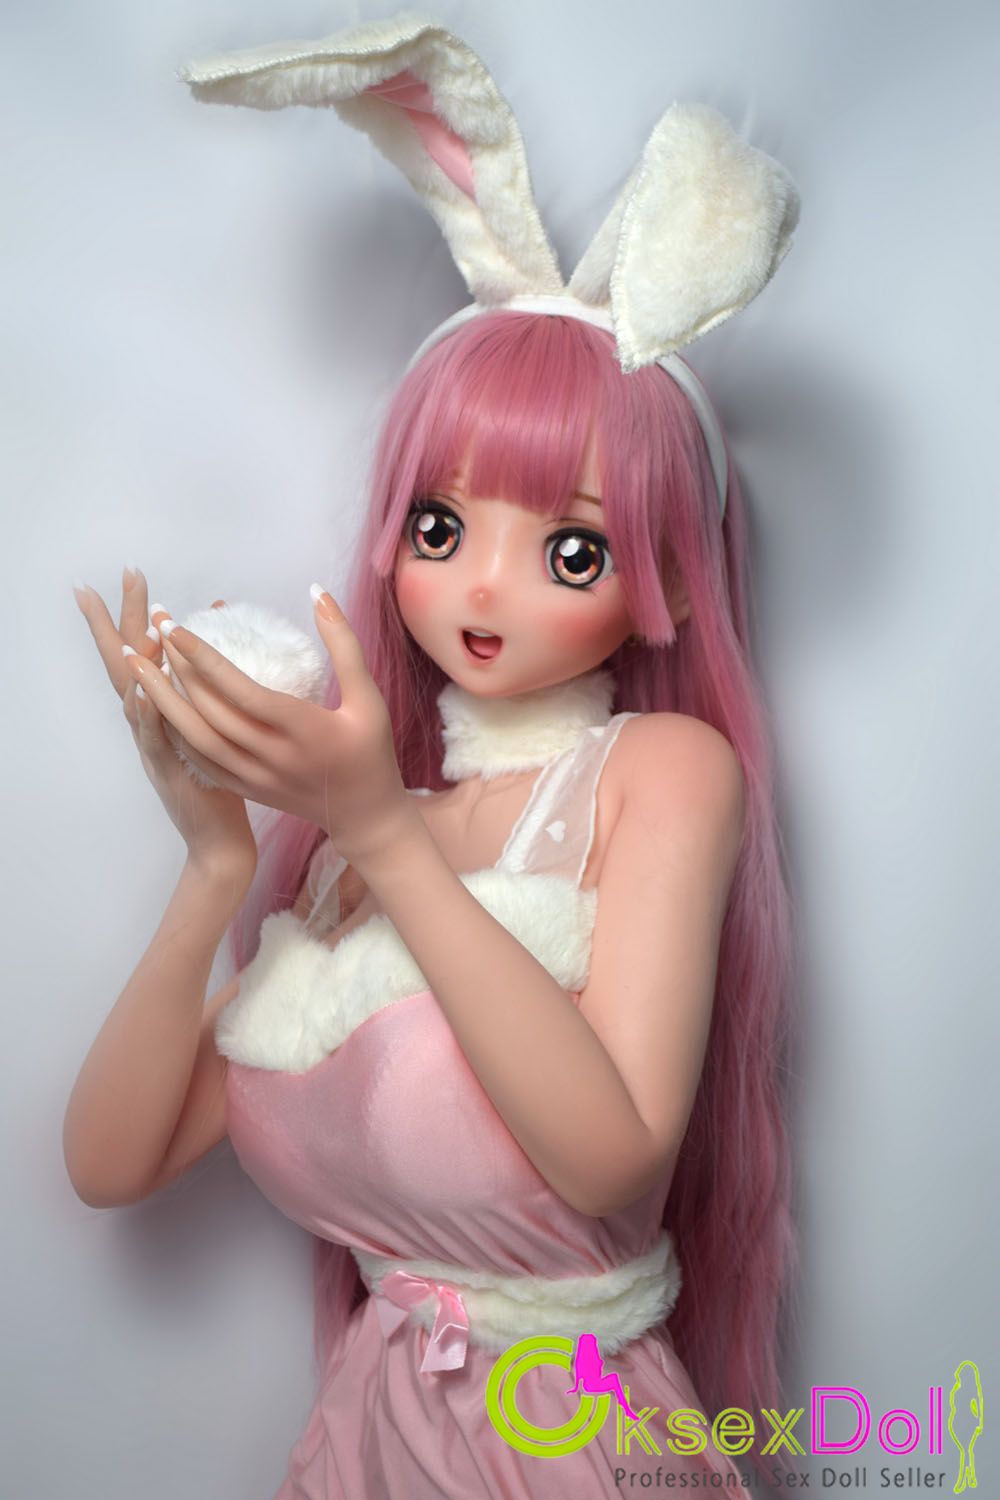 Huge Breast Doll images